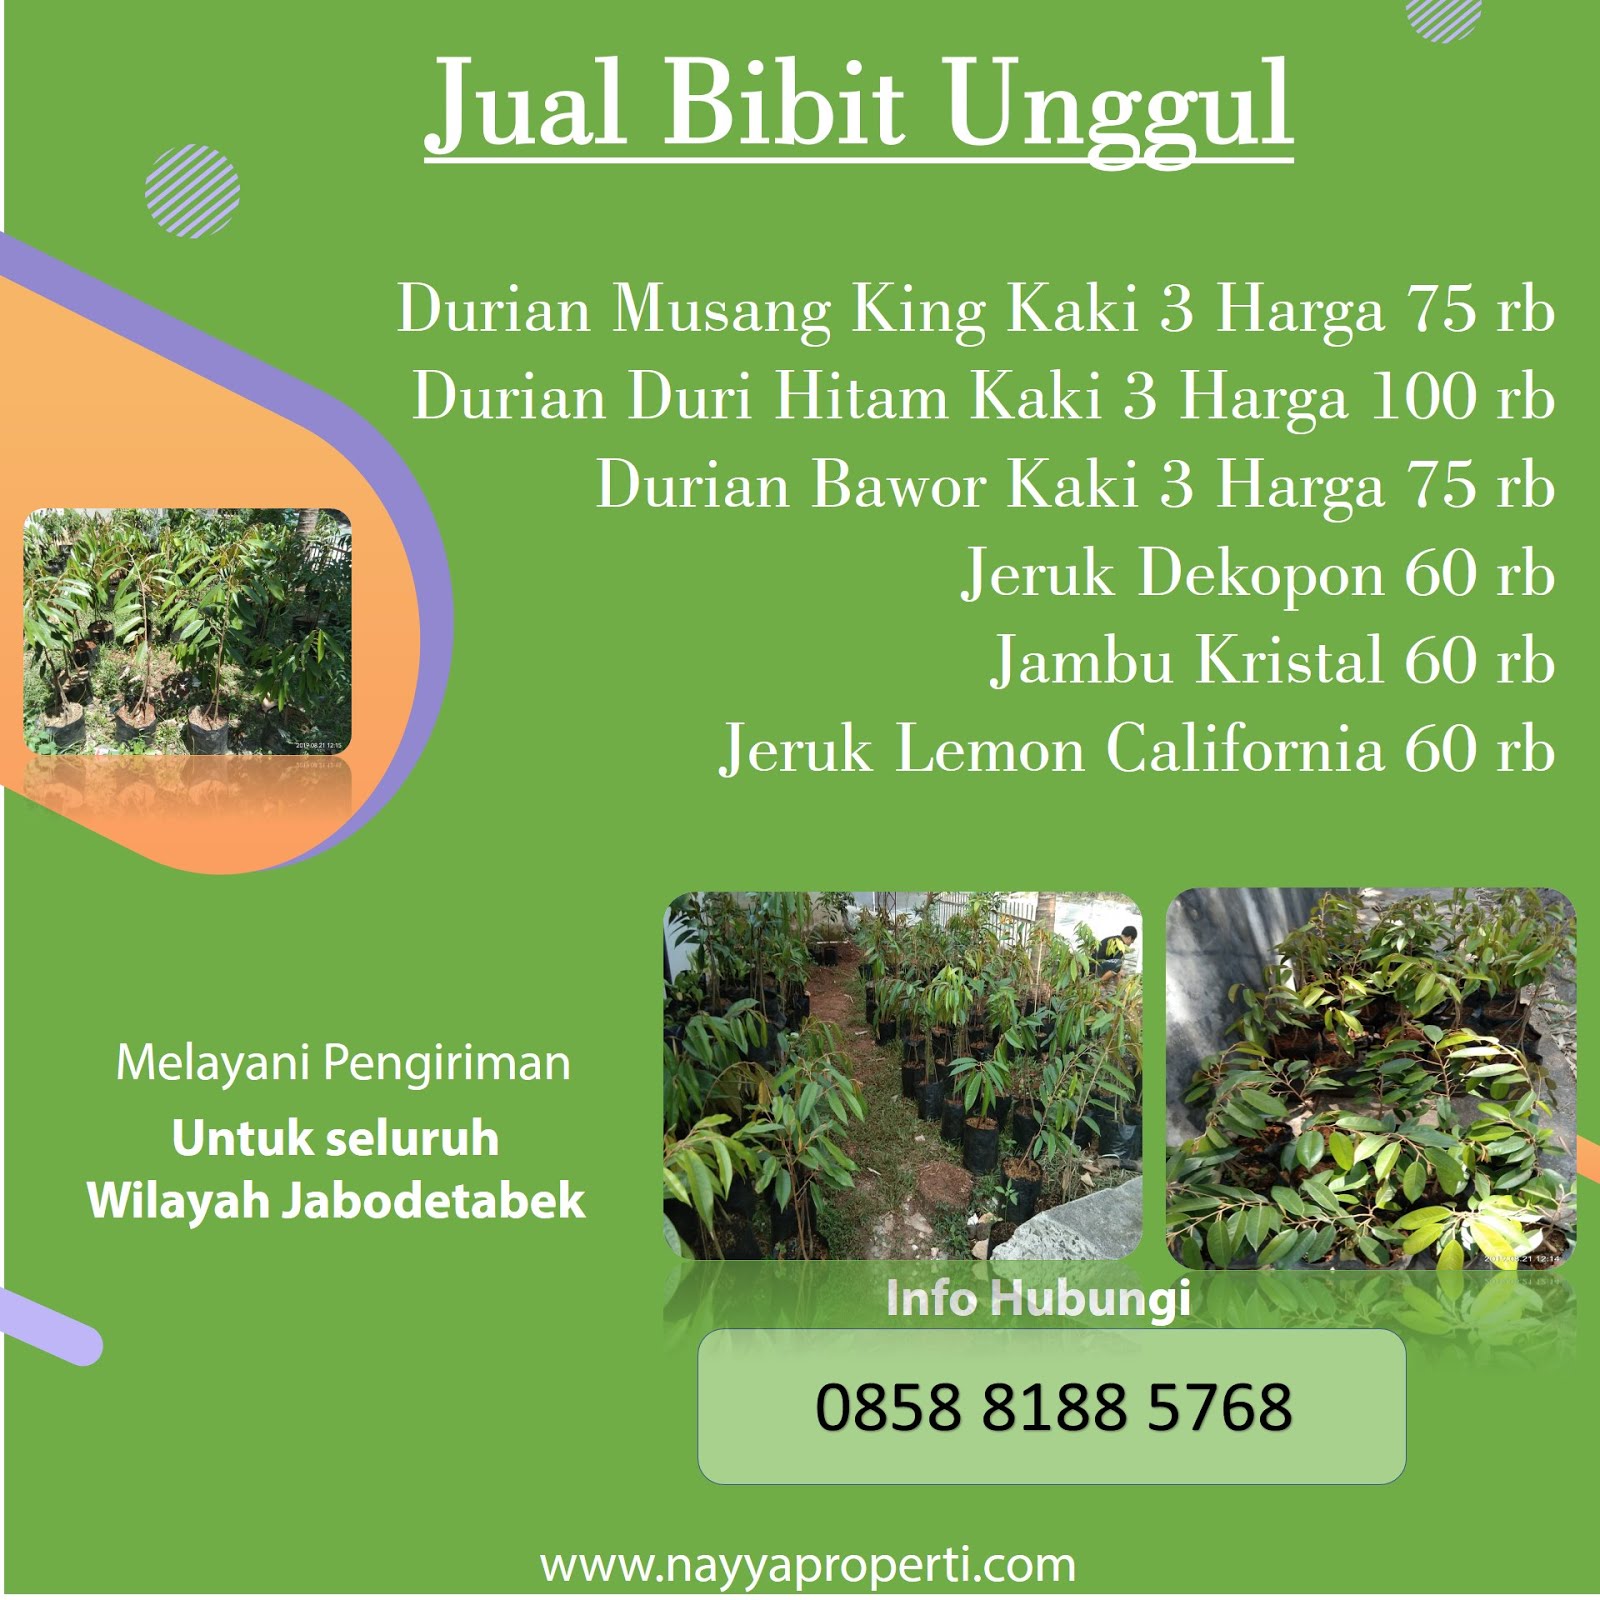 Jual Bibit Durian, Jeruk Lemon, dan Jambu Kristal di Cileungsi